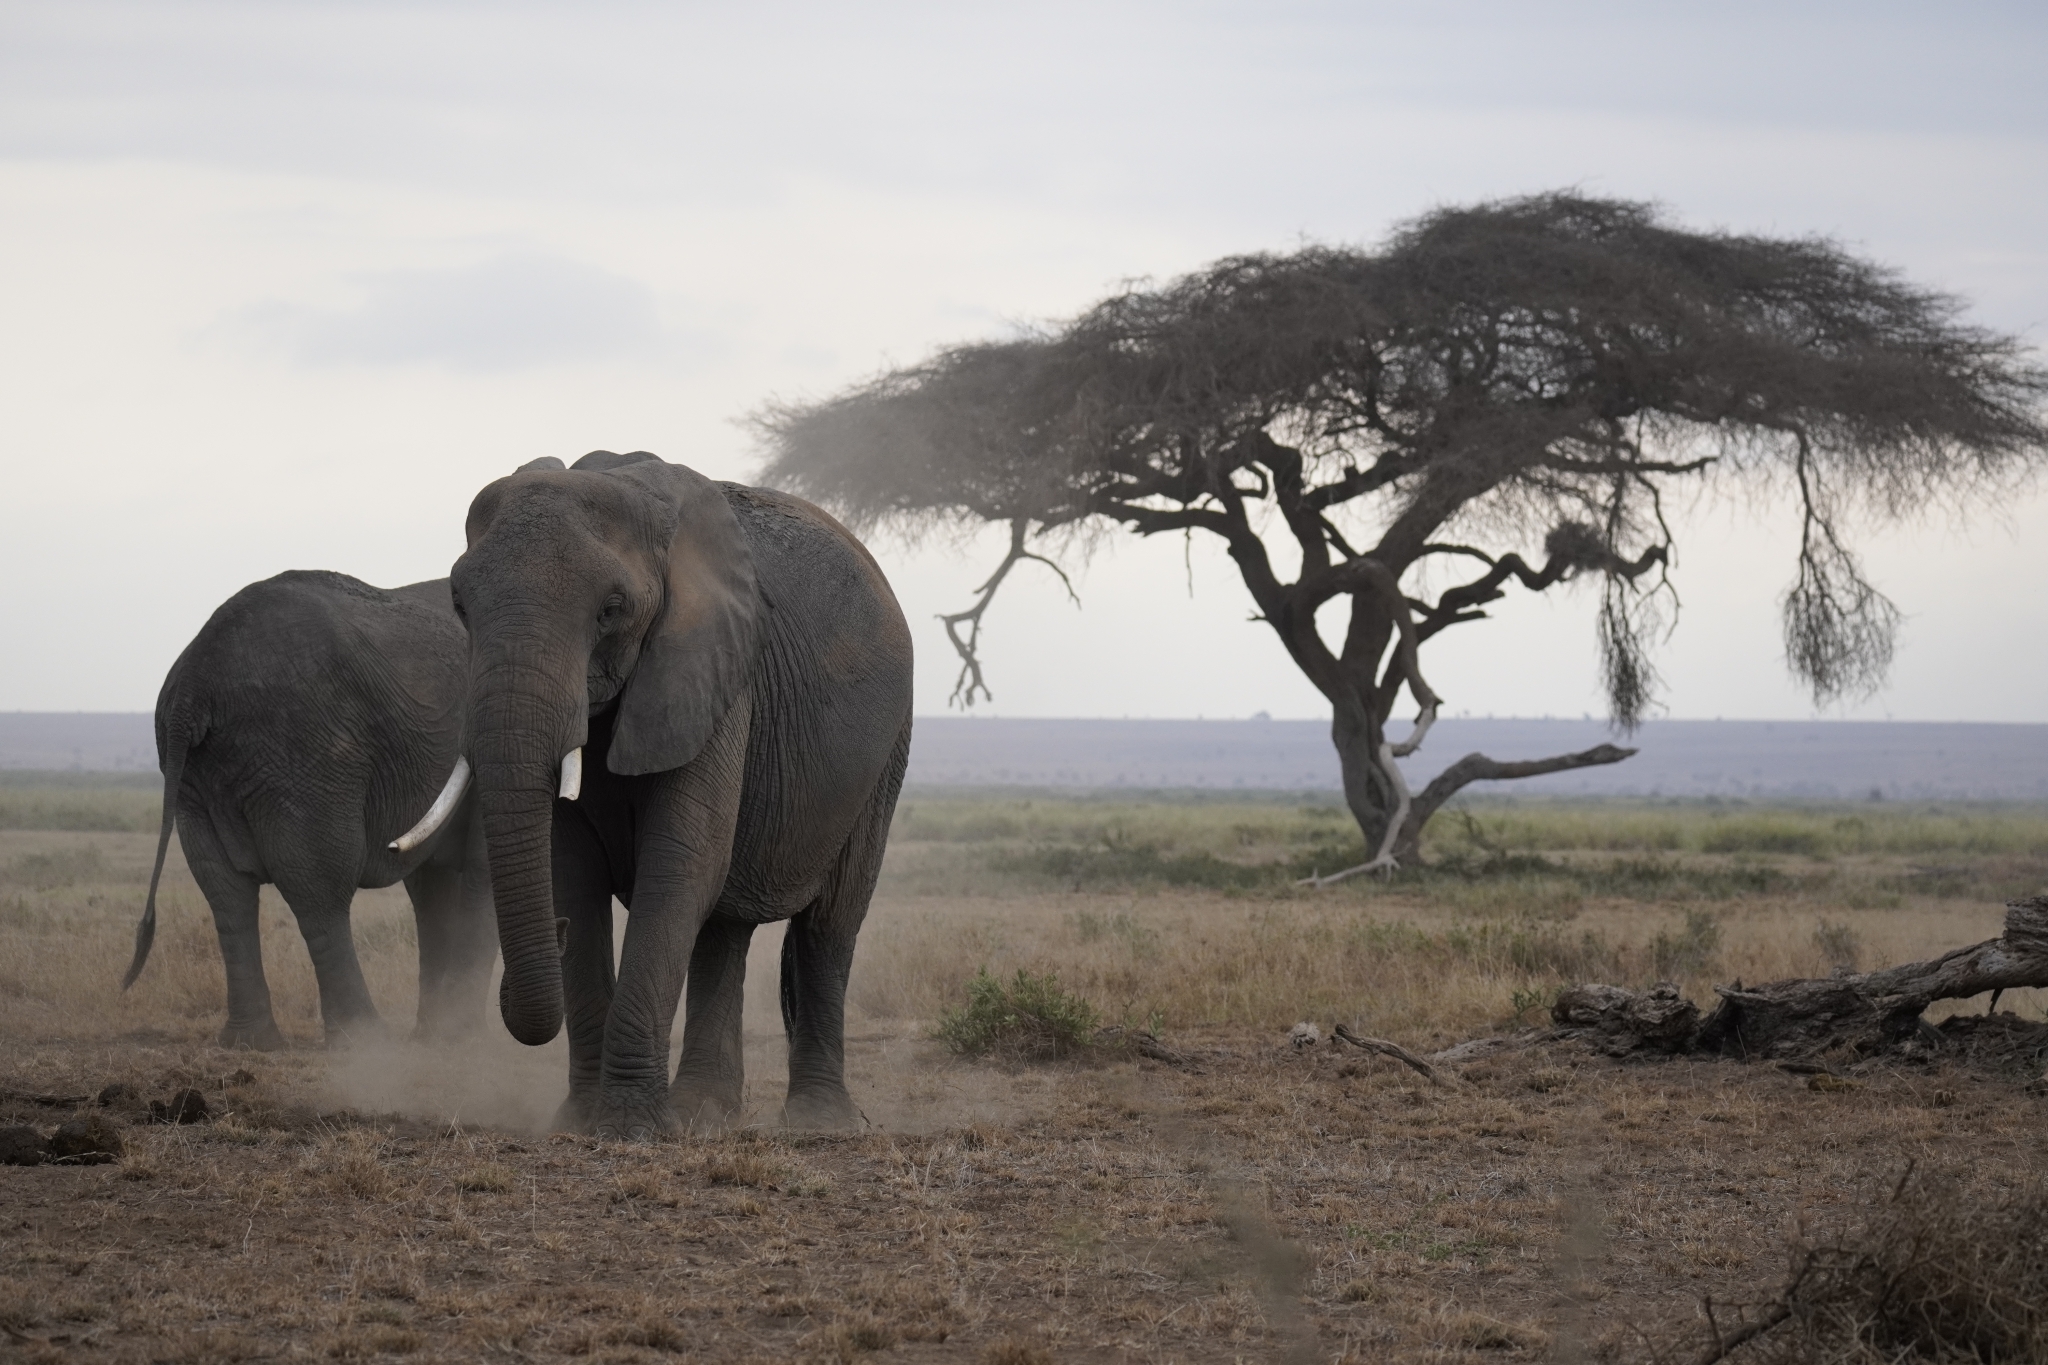 Two elephants on a grassy plain with acacia tree